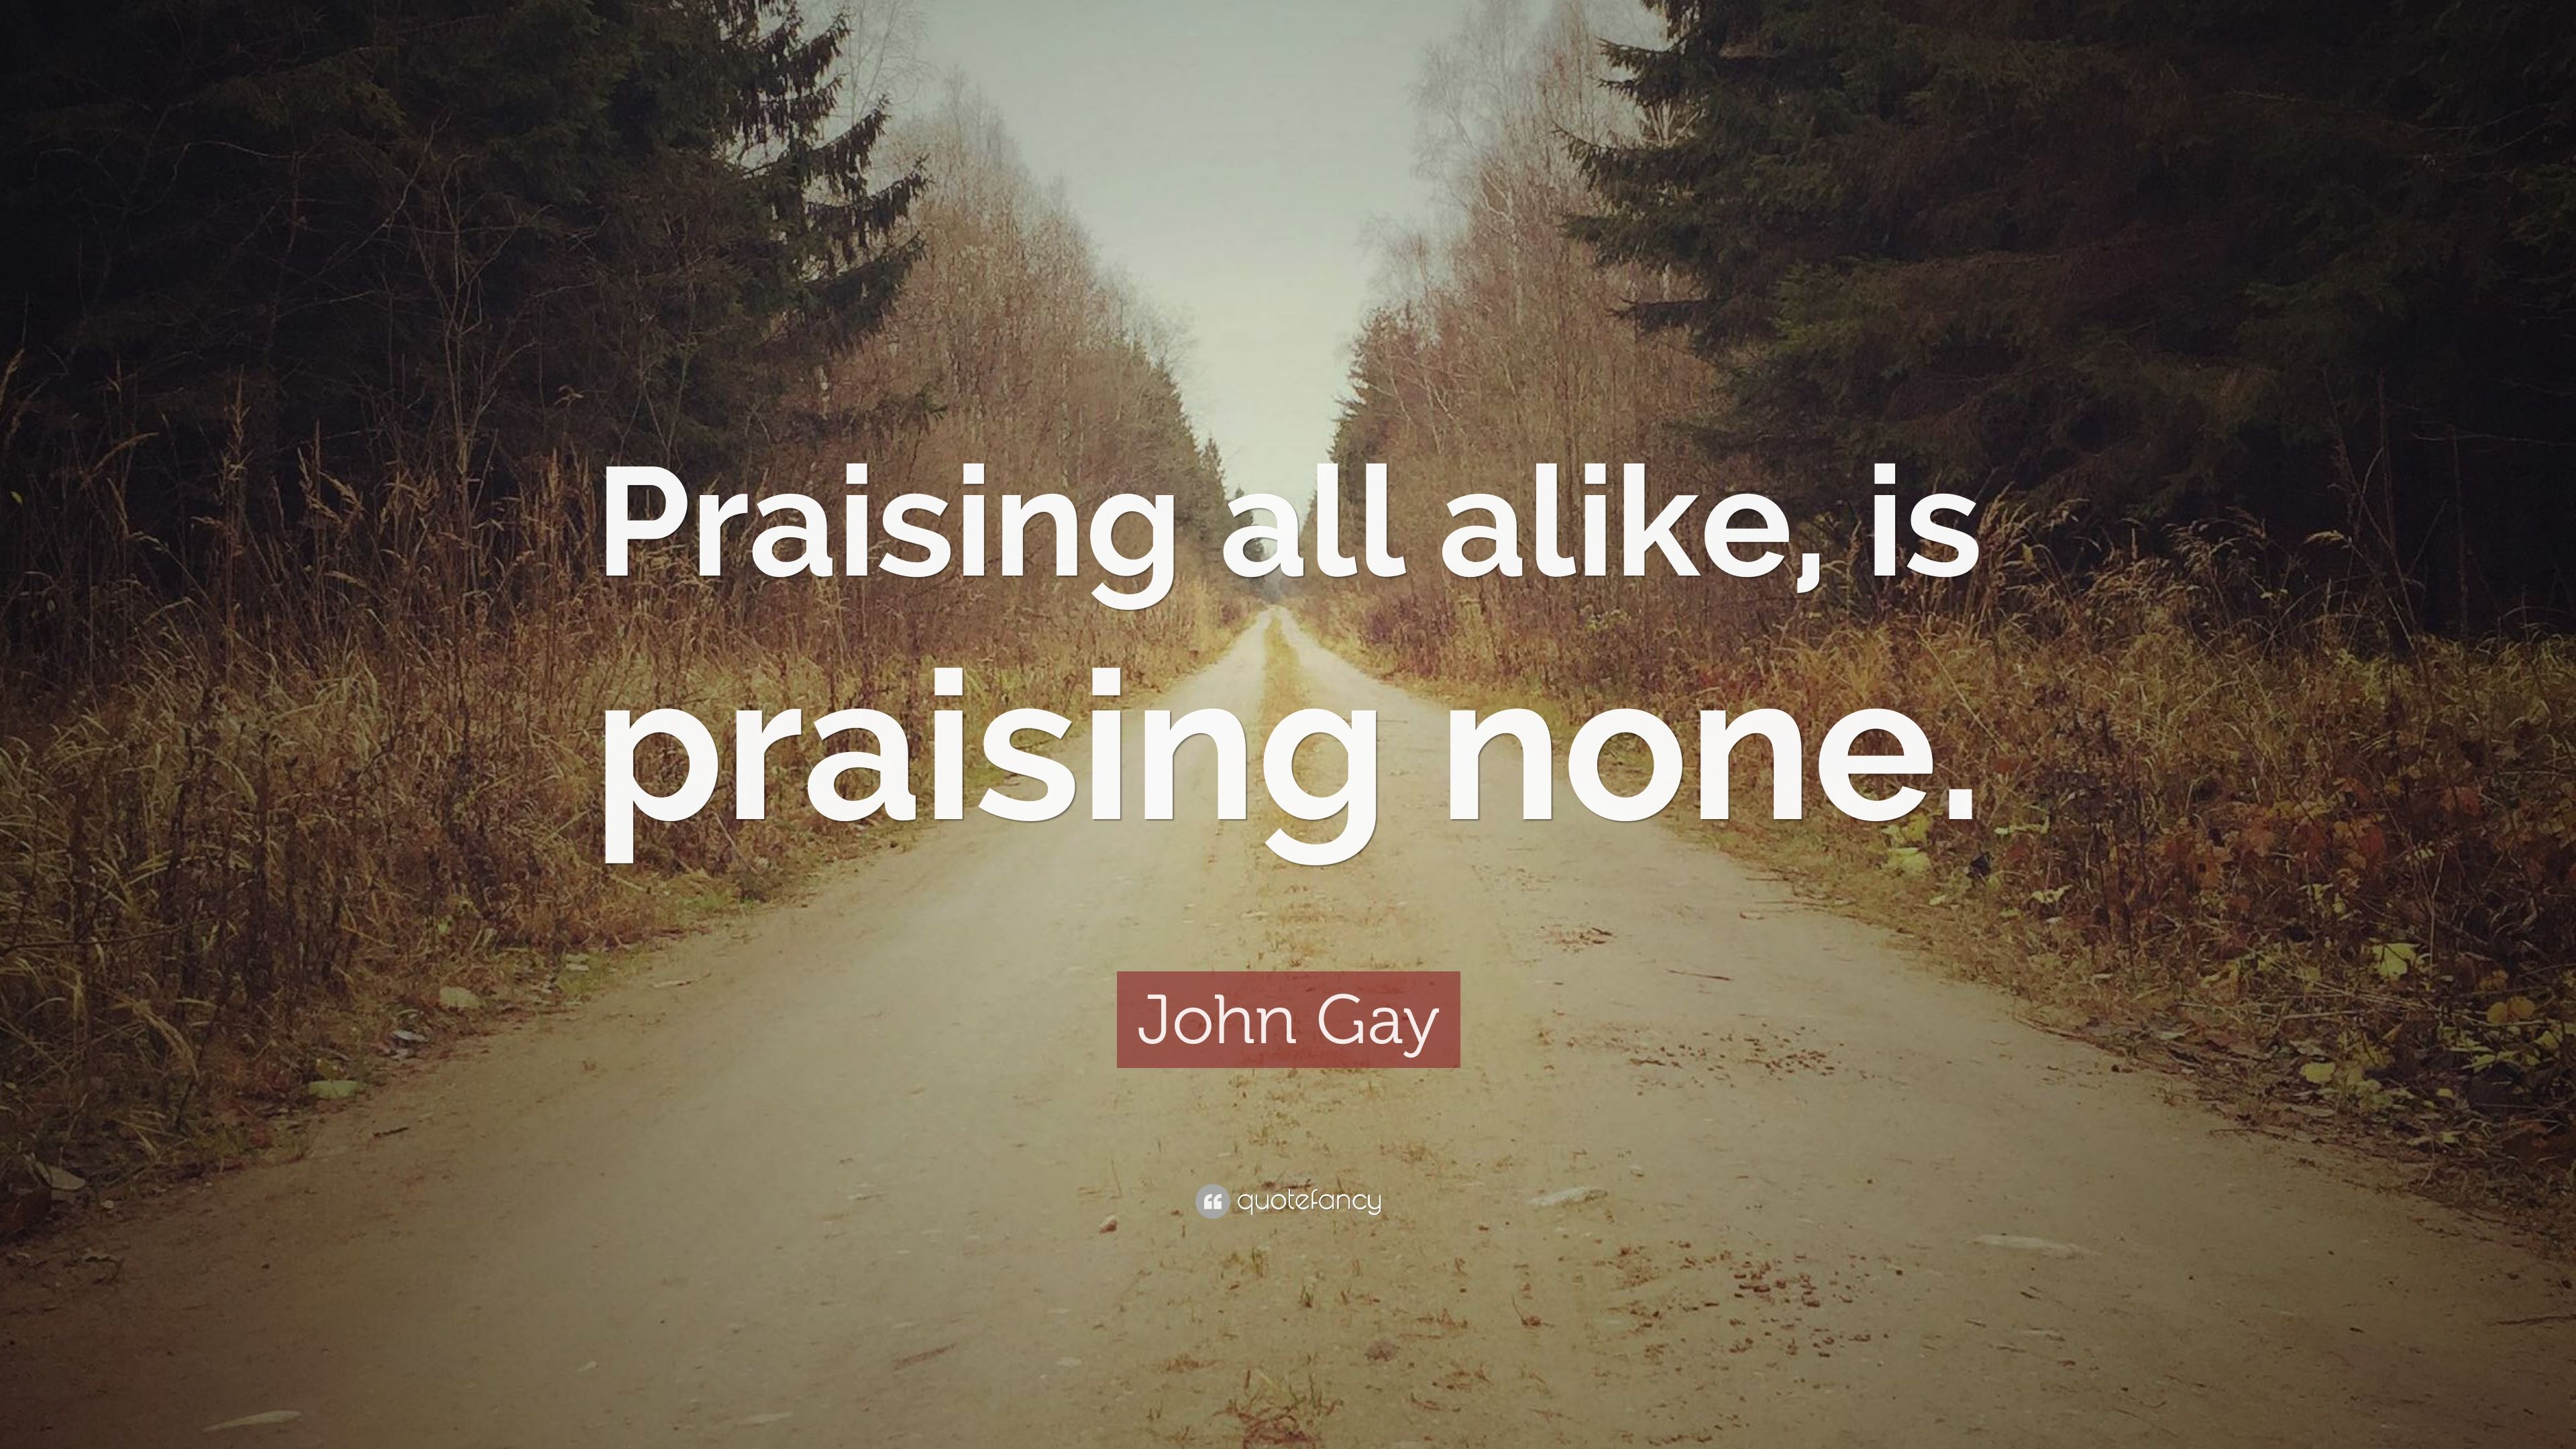 John Gay Quote: “Praising all alike, is praising none.” 10